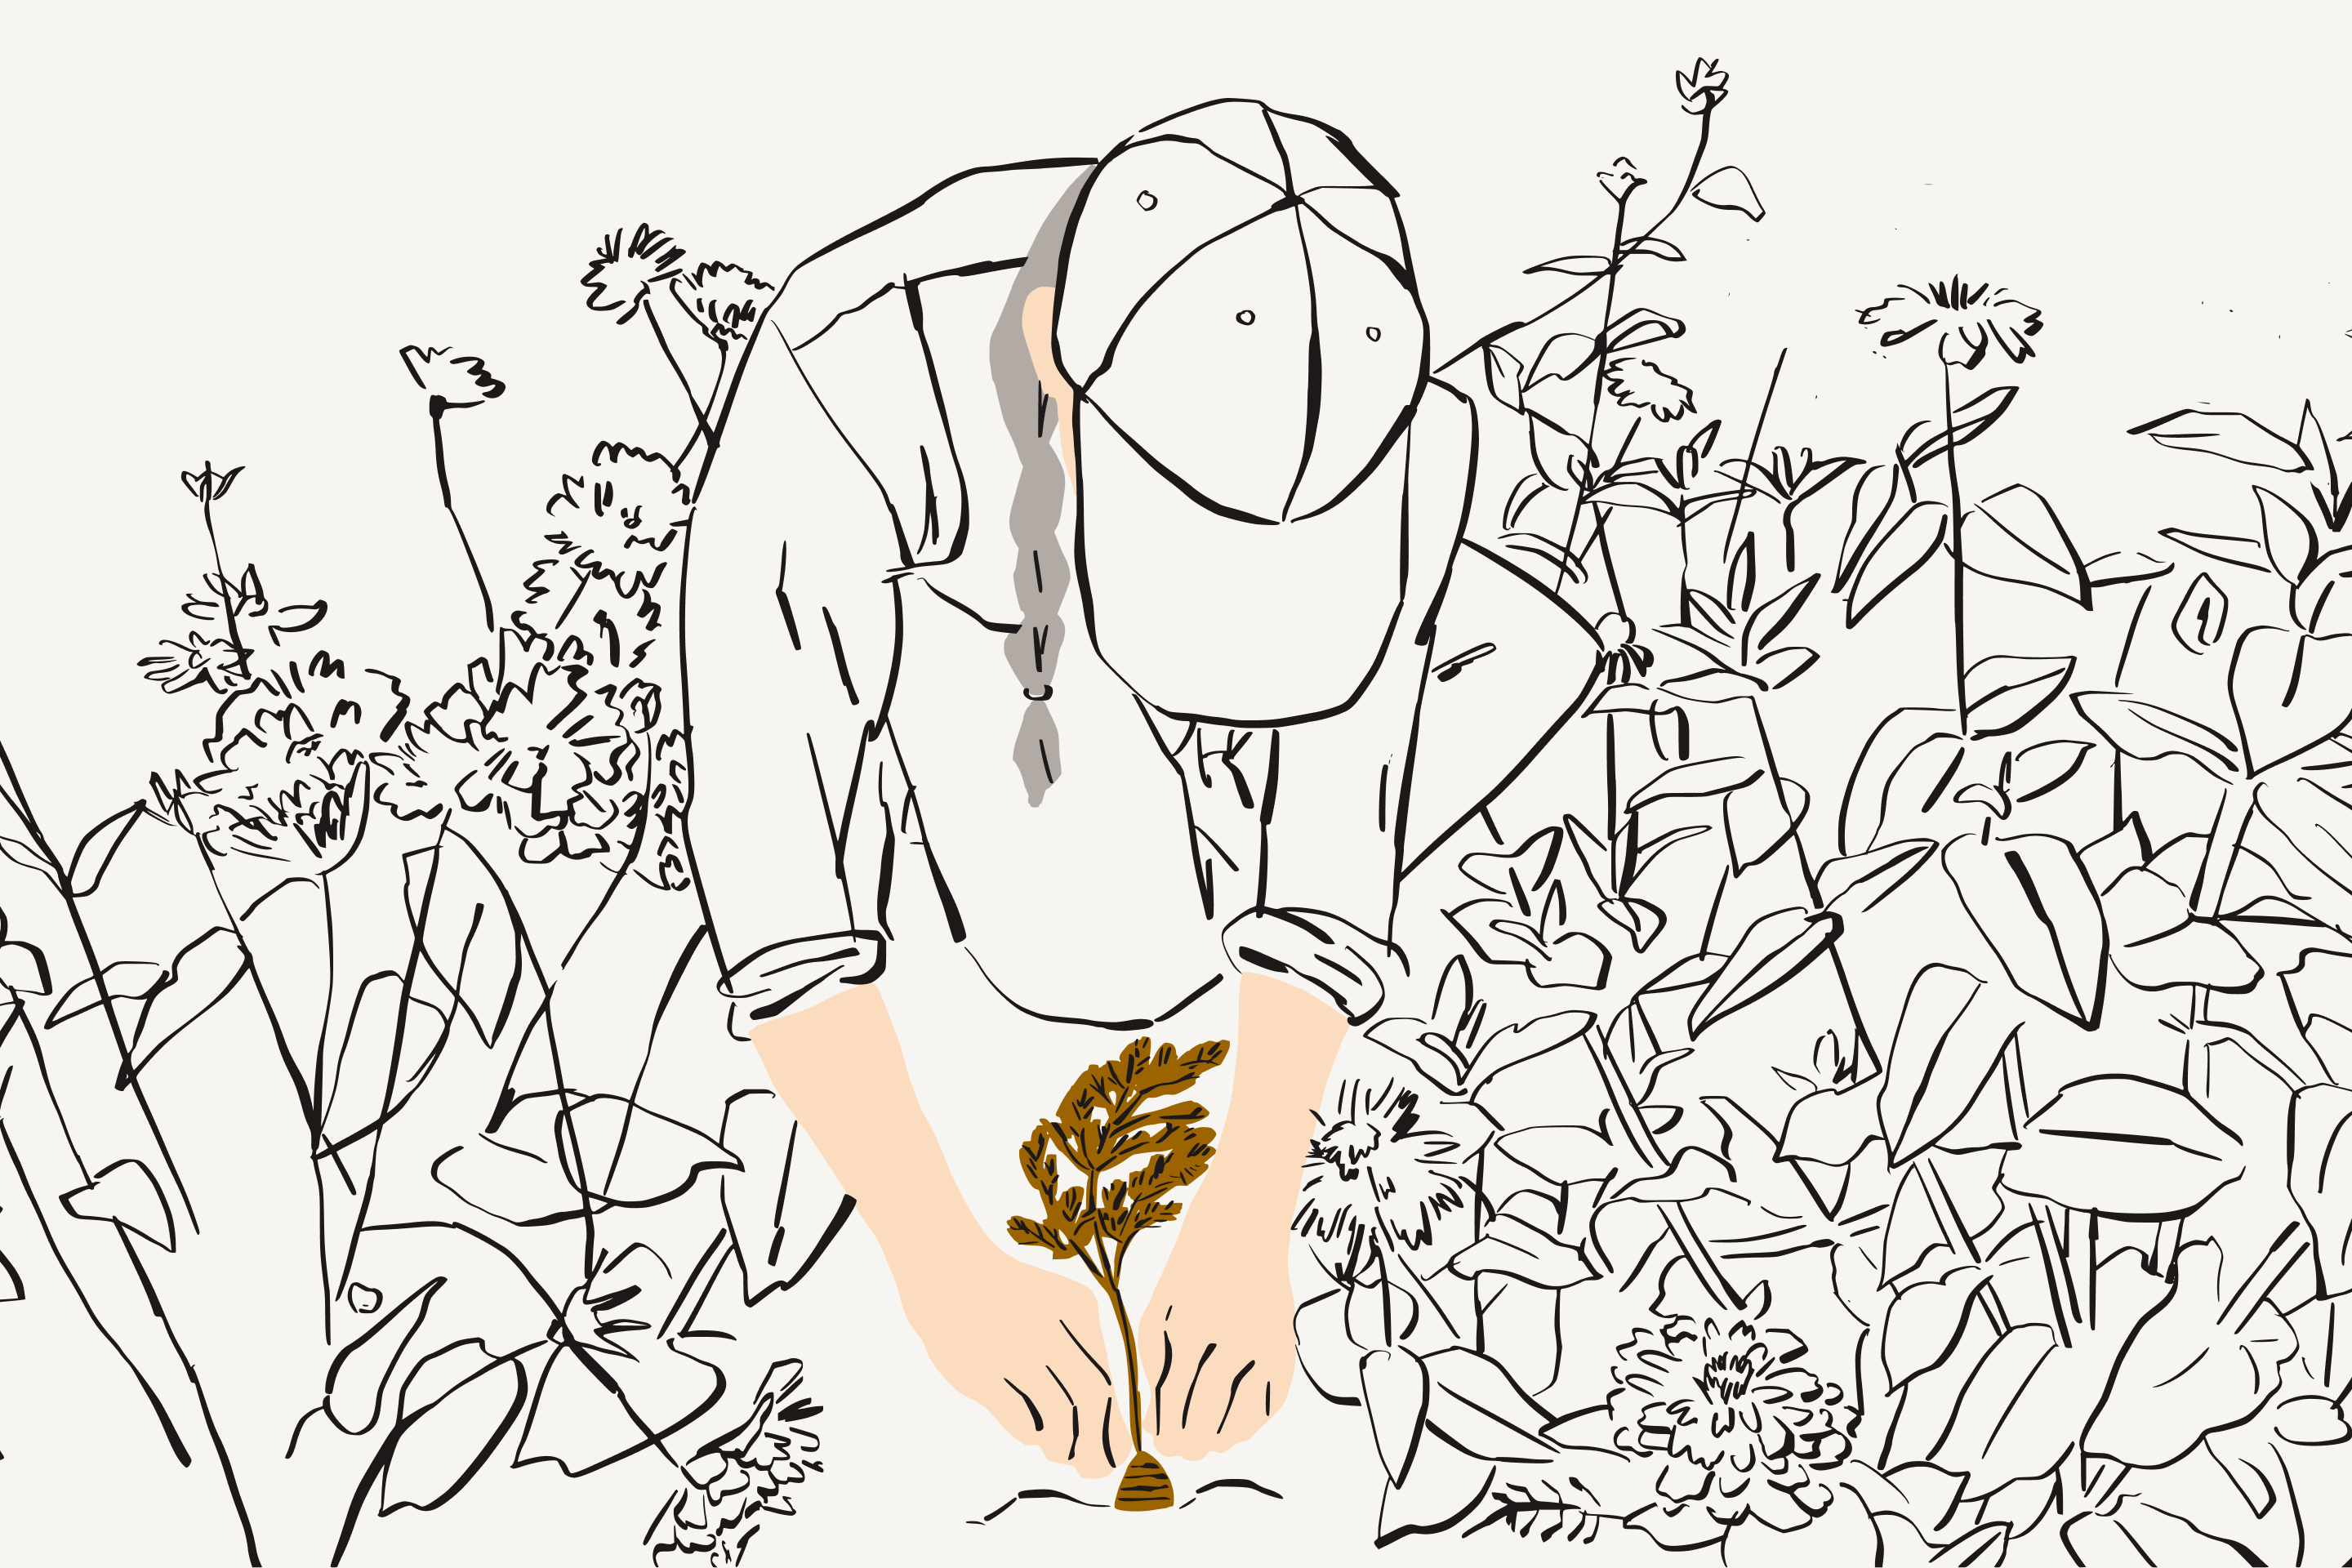 Ilustrasi menunjukkan seorang wanita yang dikelilingi oleh dedaunan dan menanam sayuran akar